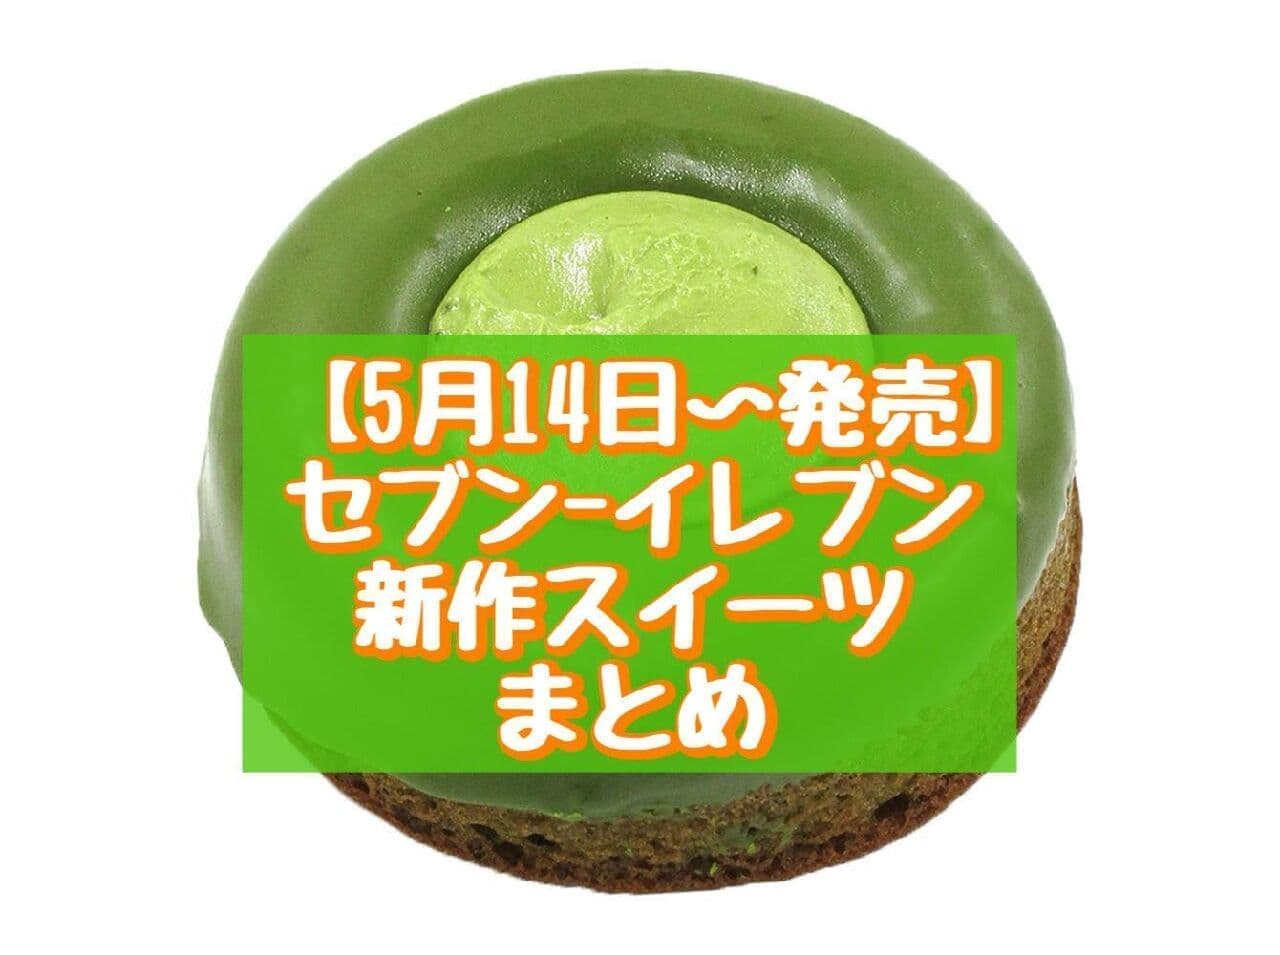 7-ELEVEN "Cake with Green Tea and Condensed Milk Cream